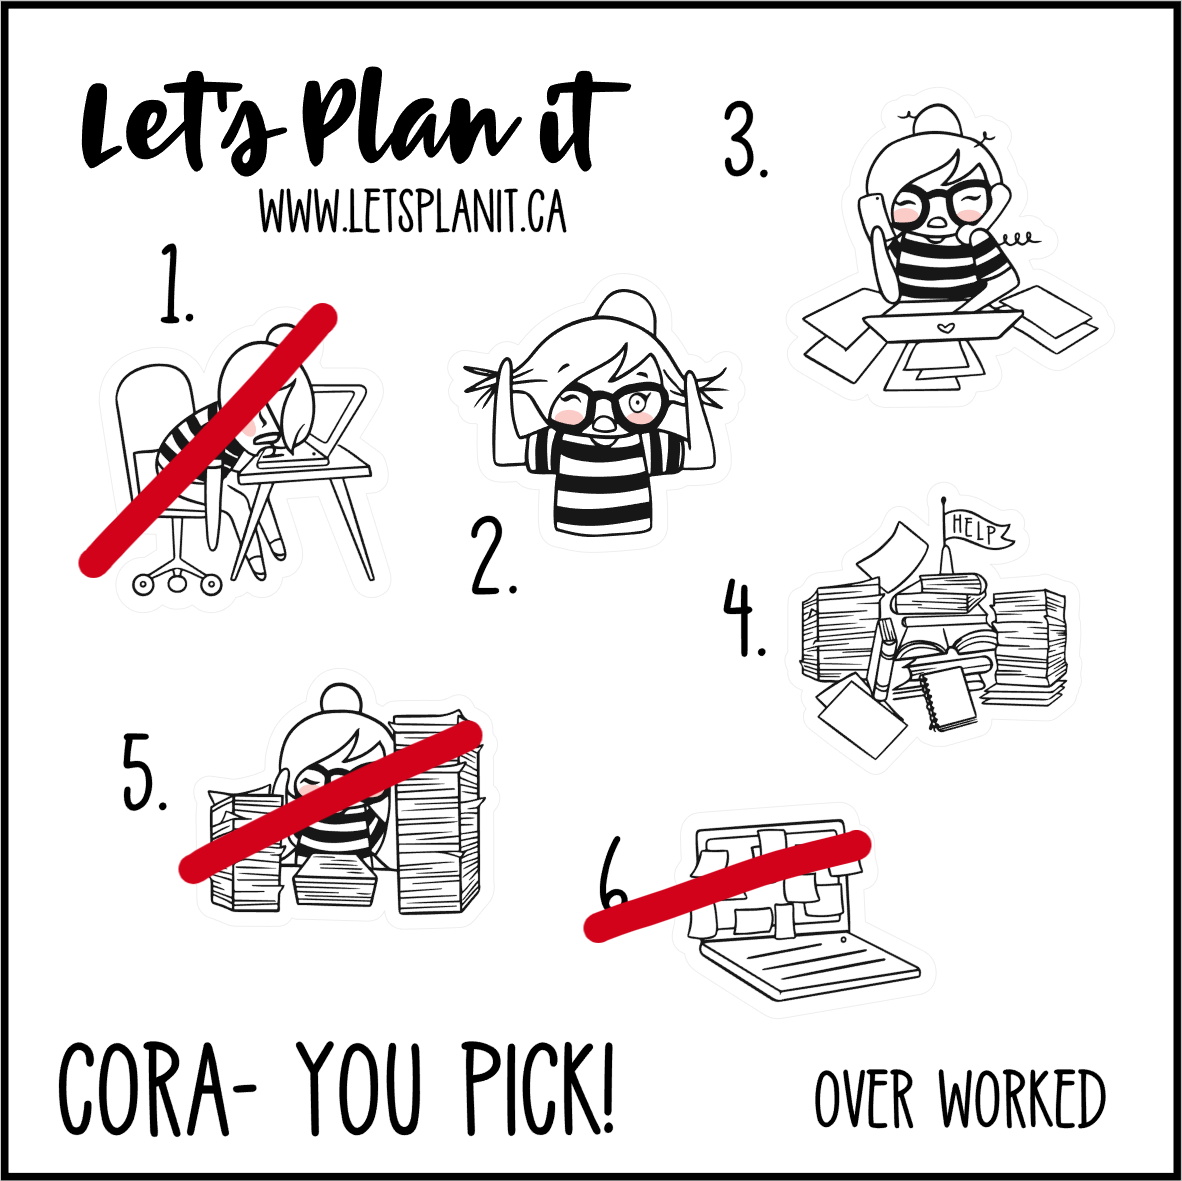 Cora-u-pick- Overworked